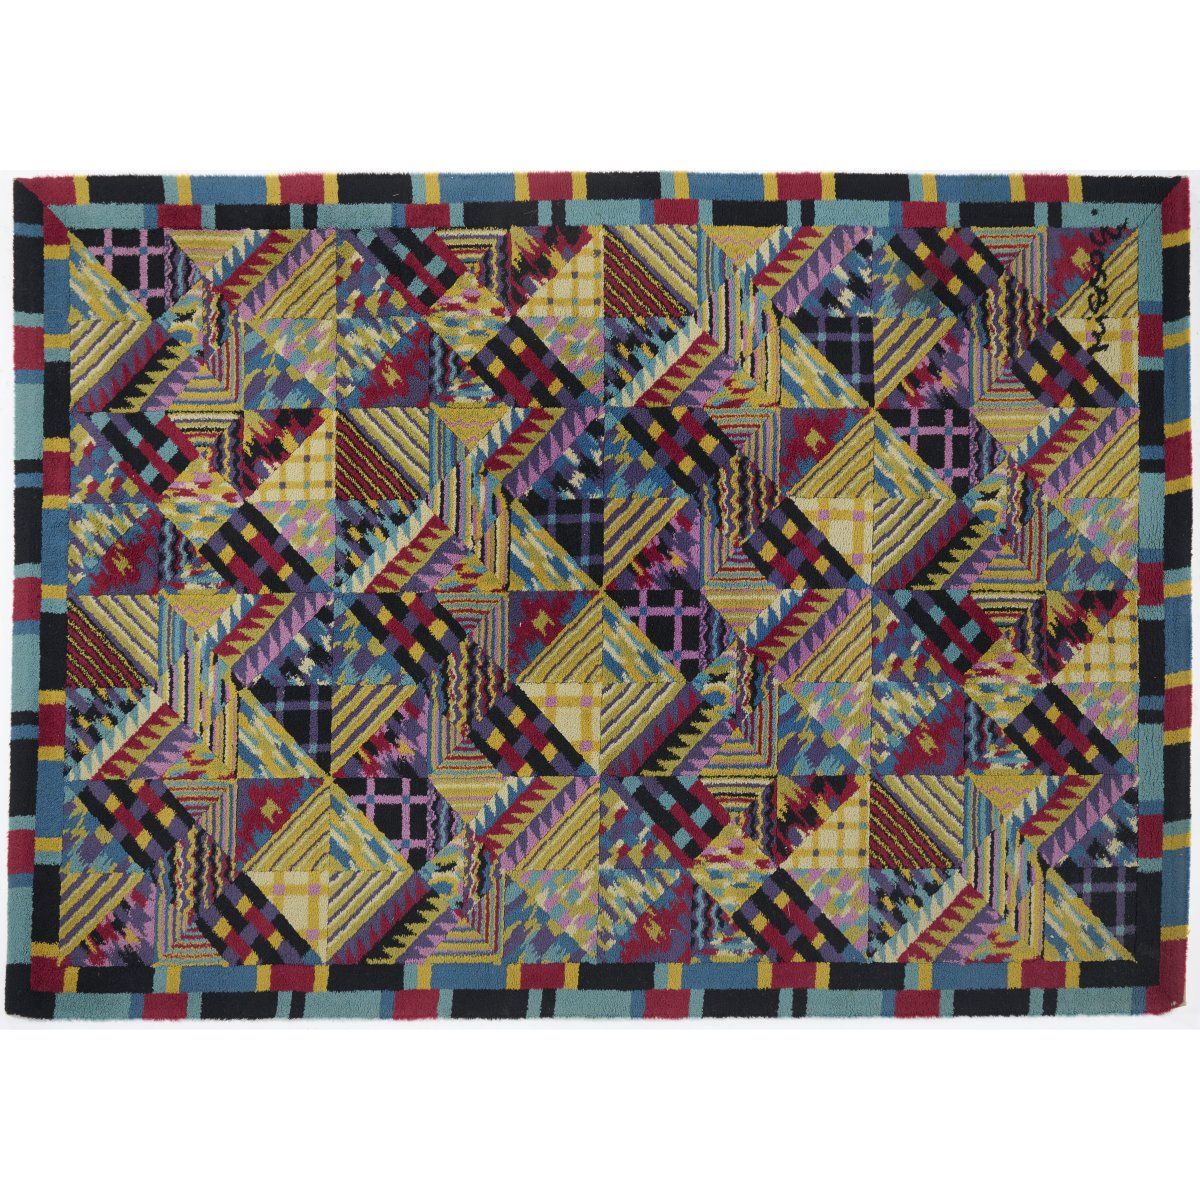 Ottavio Missoni Carpet 'Sirio', 1980s
237 x 166 cm. 
Made by T&J Vestor, Golasec&hellip;